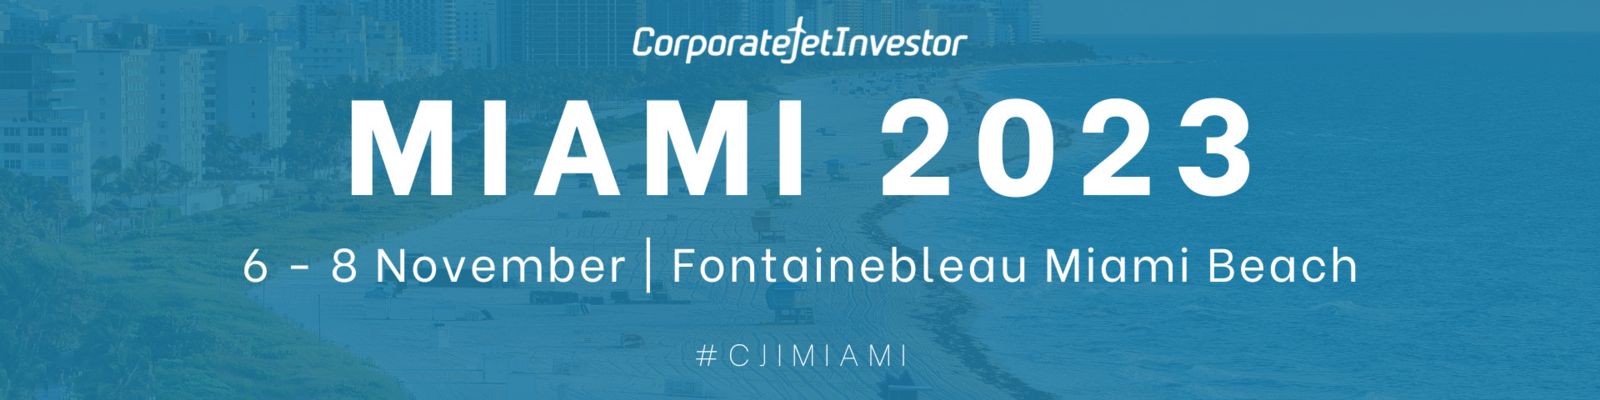 Corporate Jet Investor Miami